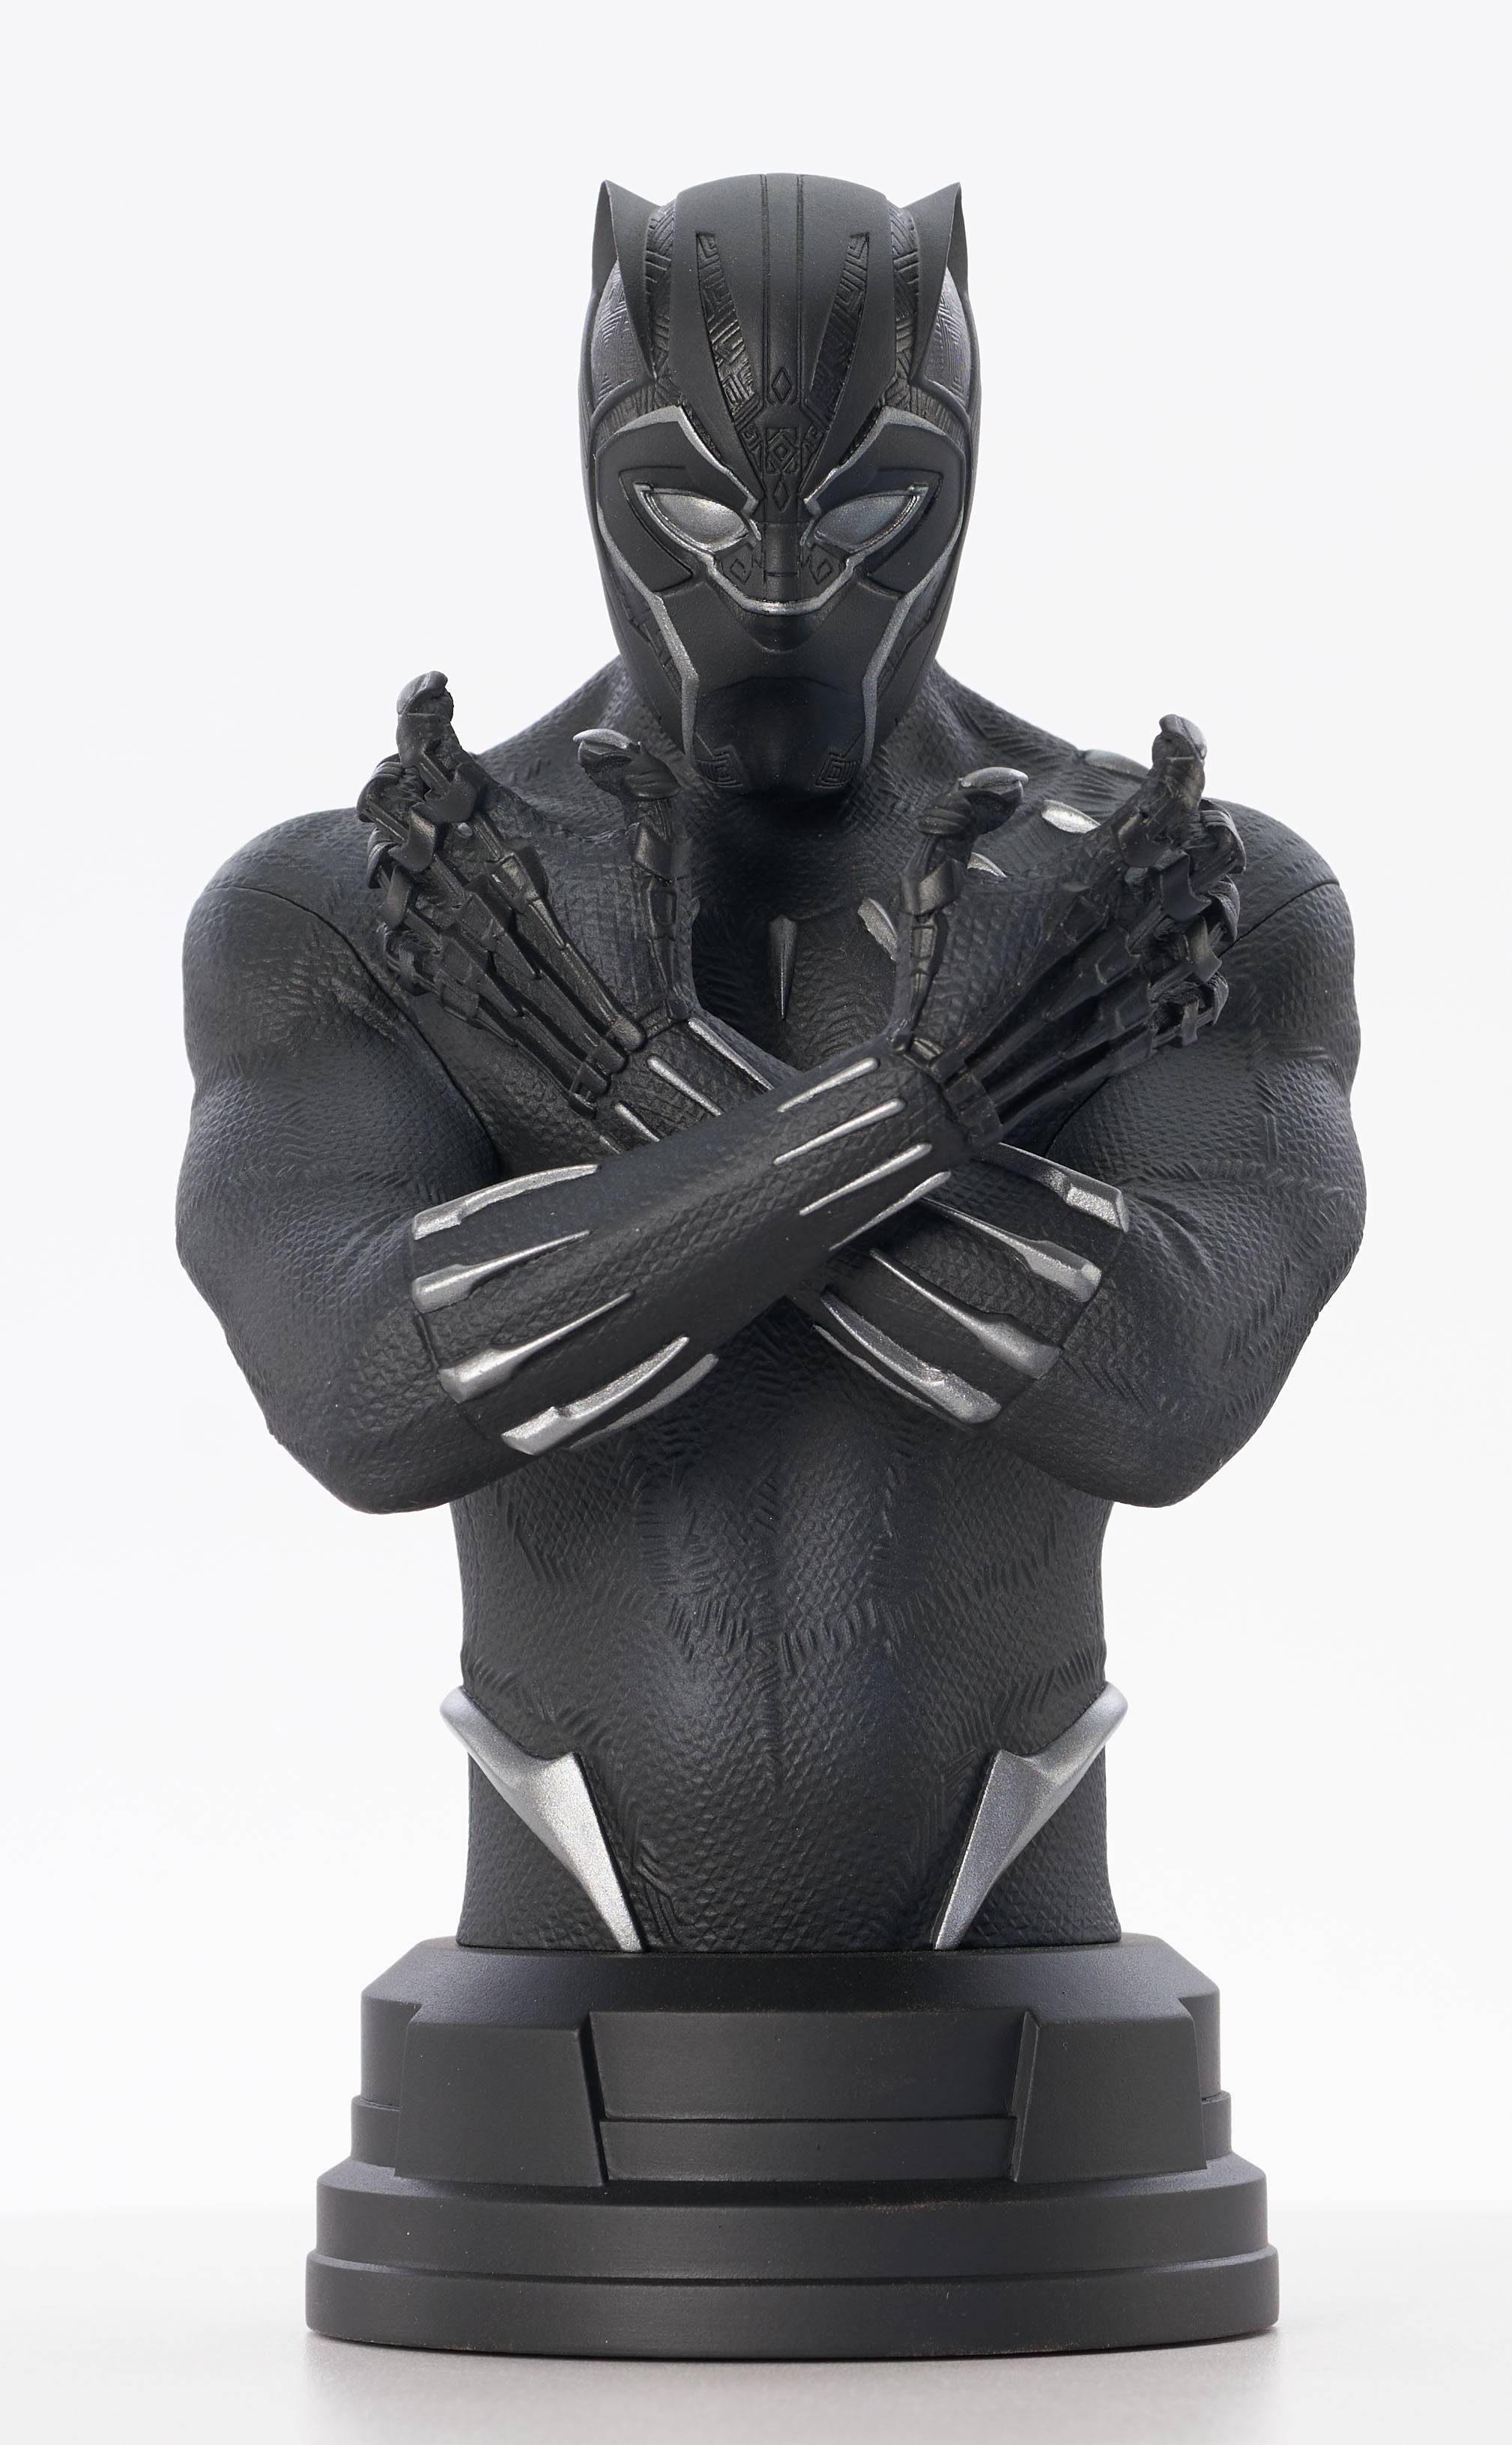 Marvel Avengers Endgame - Black Panther 1/6 Scale Bust